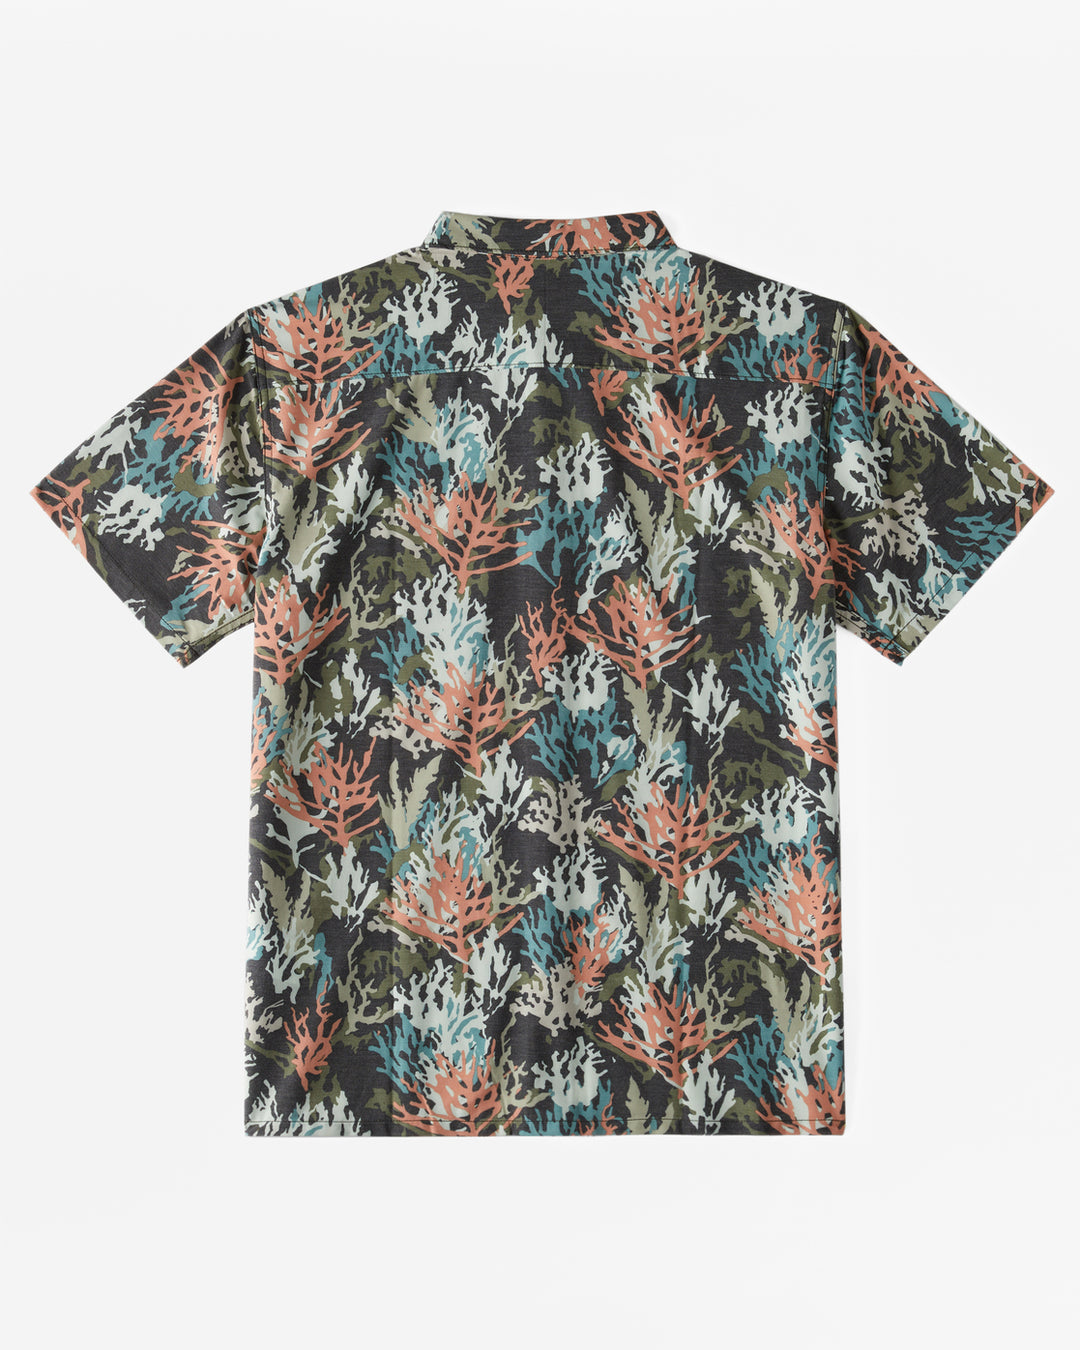 Billabong Coral Gardeners Surftrek Short Sleeve Shirt - Multi - Sun Diego Boardshop